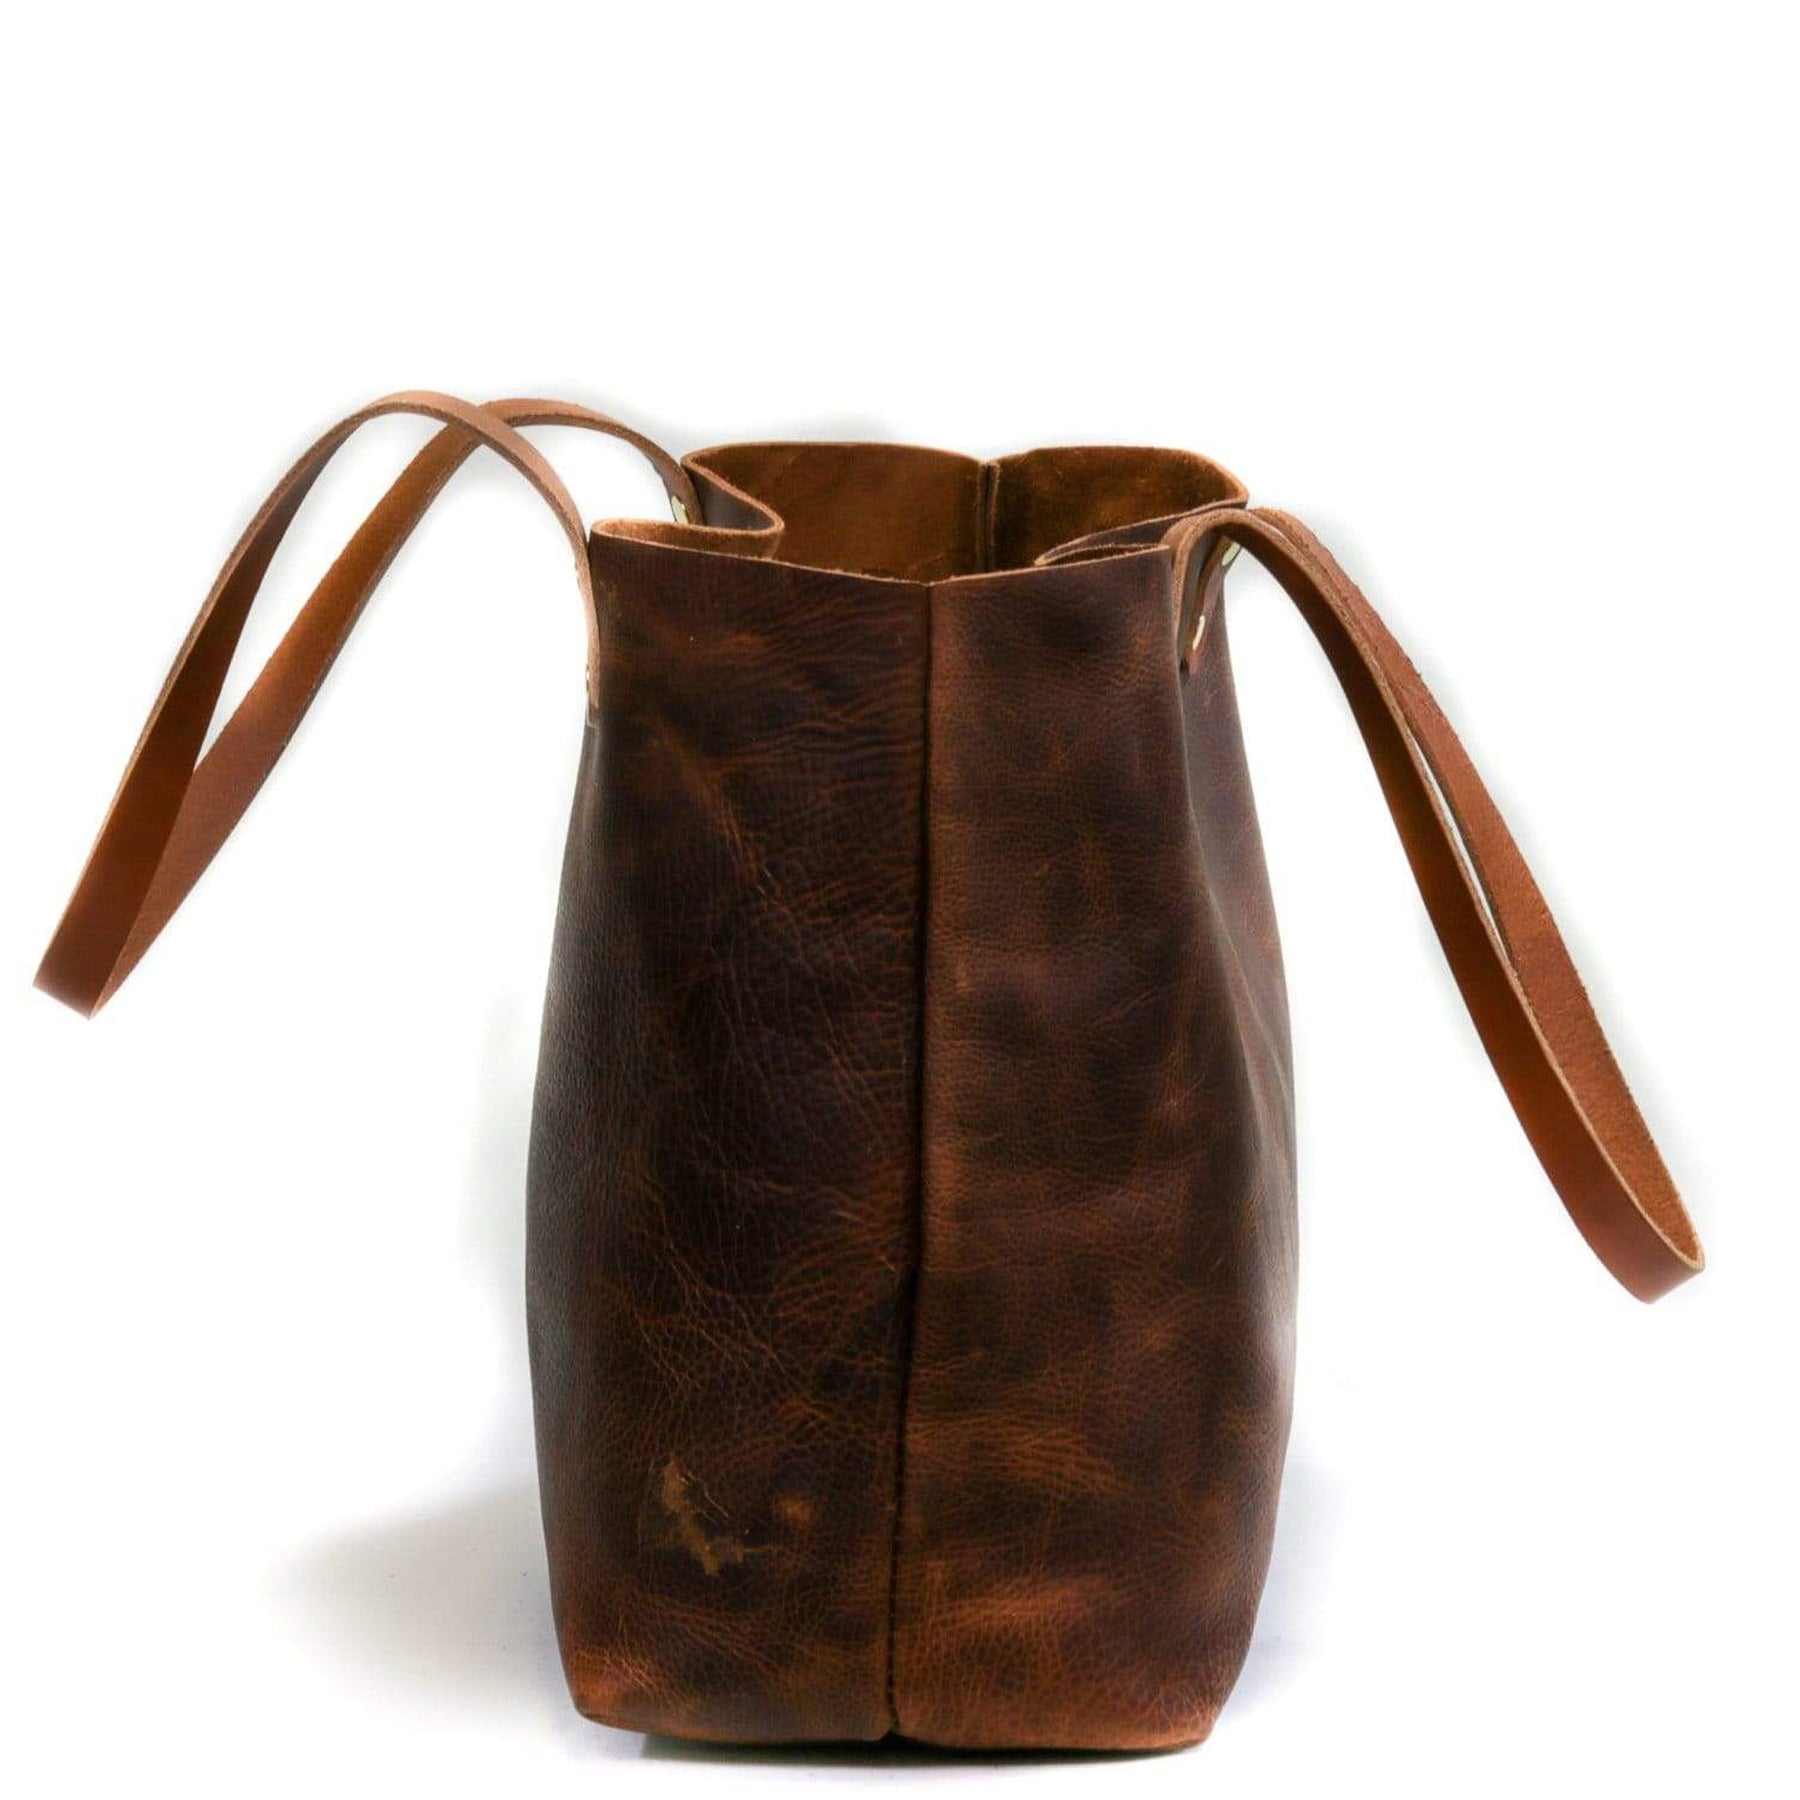 Cognac LEATHER HOBO Bag - BROWN Oversize Shoulder Bag - Everyday Leather  Purse - Soft Leather Handbag for Women, Distressed Leather